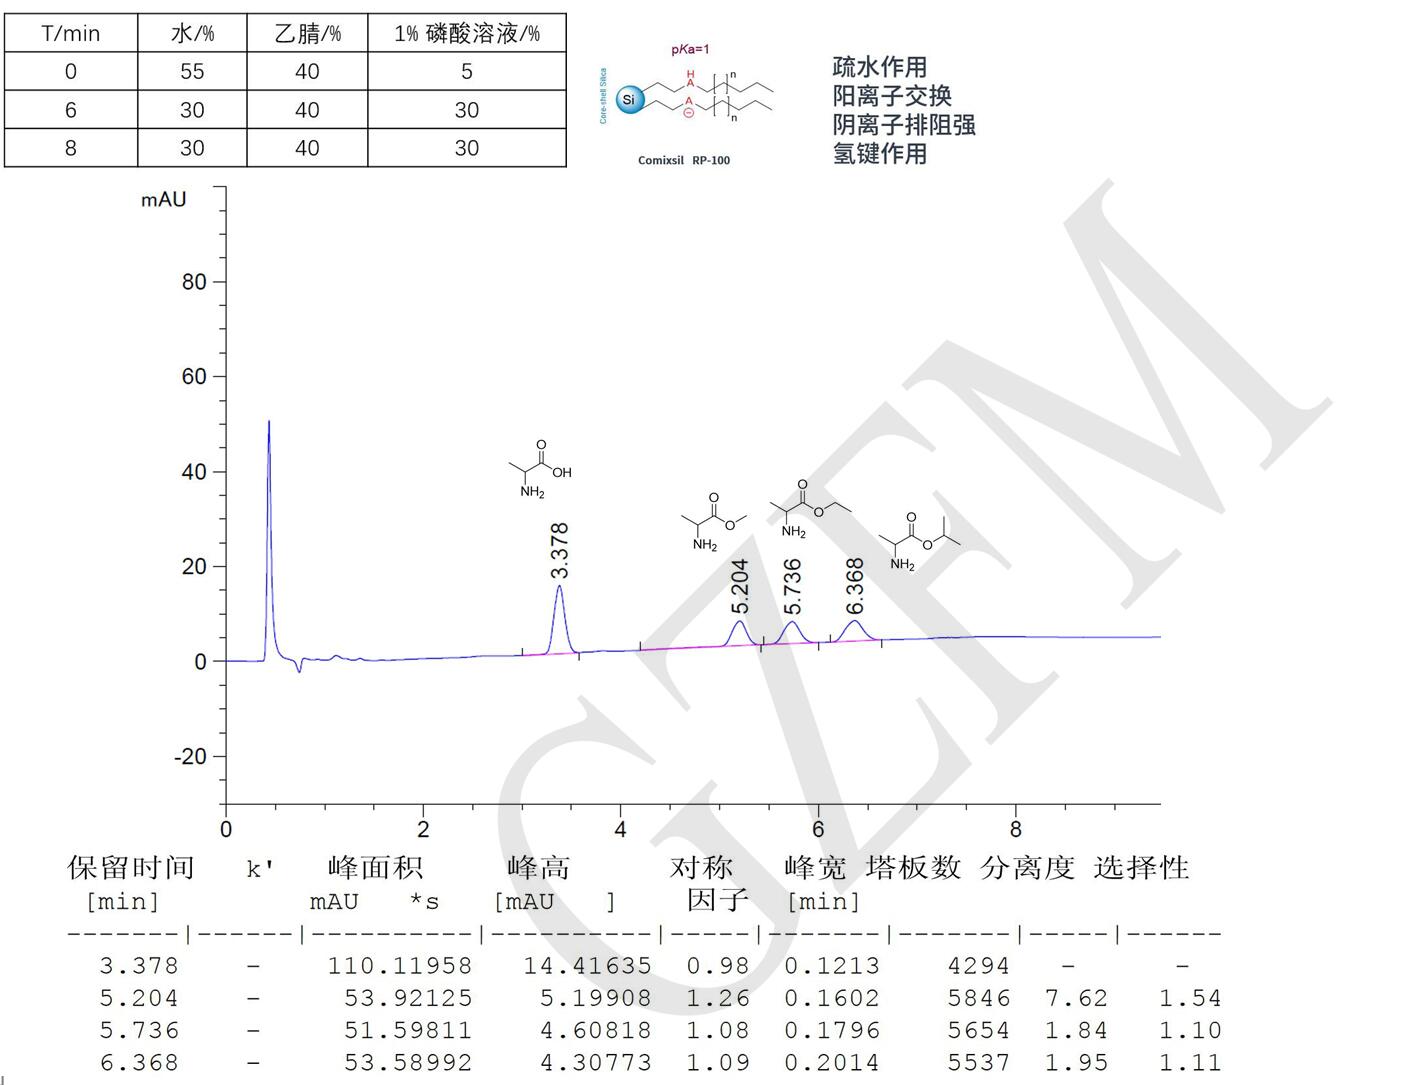 Comixsil RP-100 混合作用模式分析丙氨酸及其衍生物